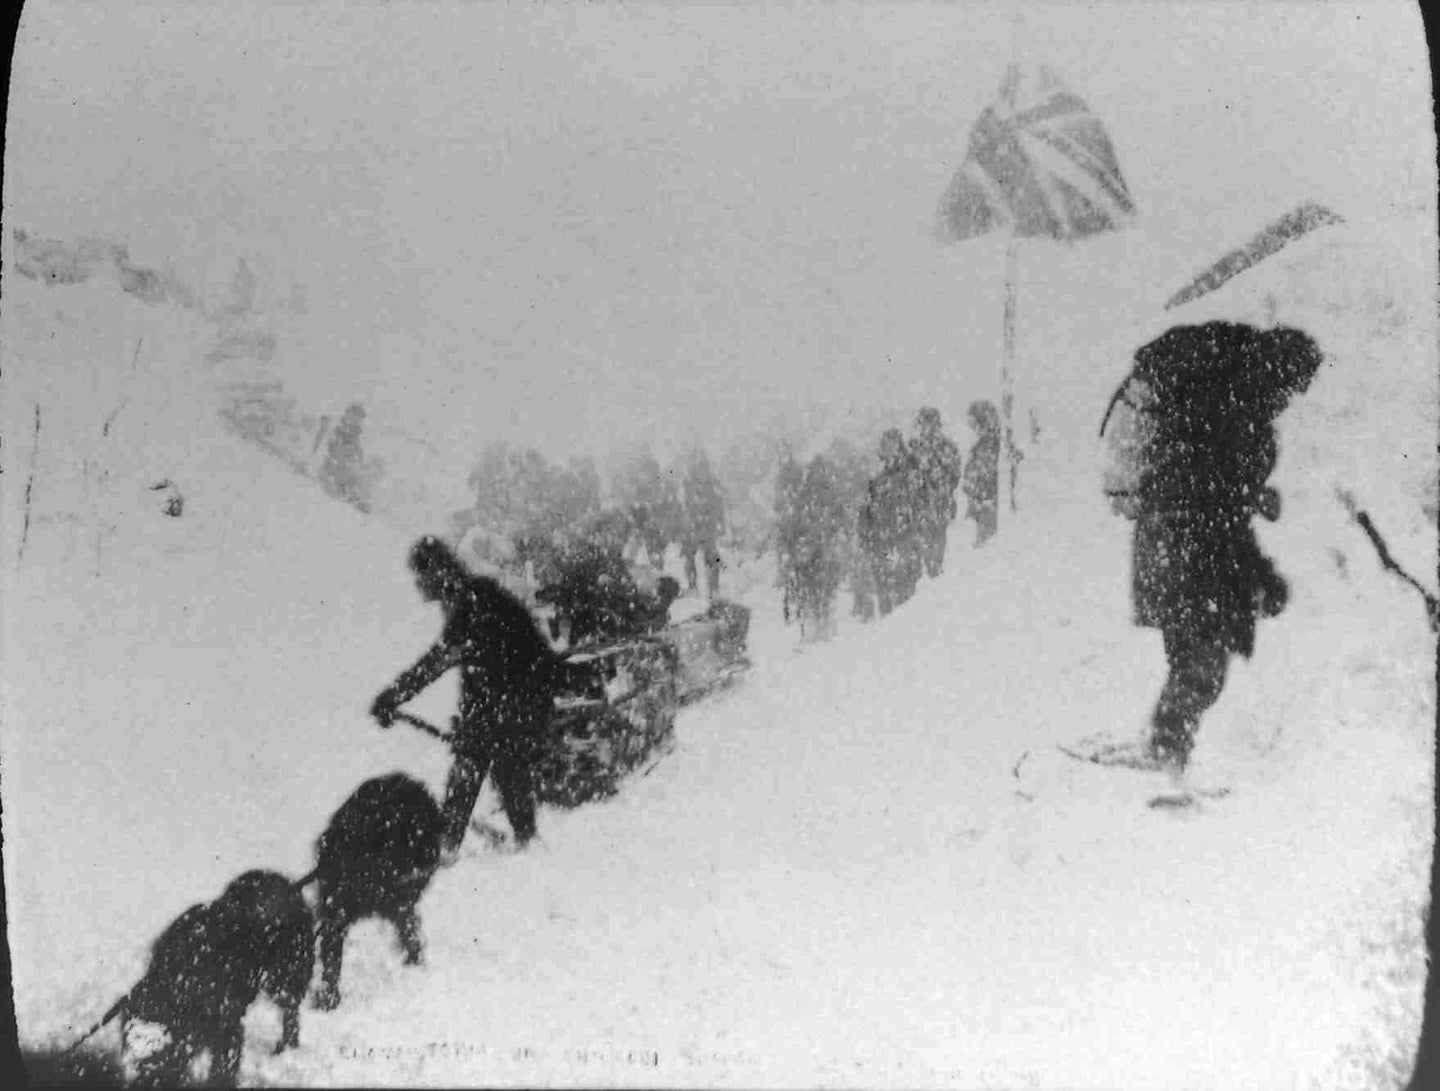 Snowstorm on Chilkoot Summit, c1897